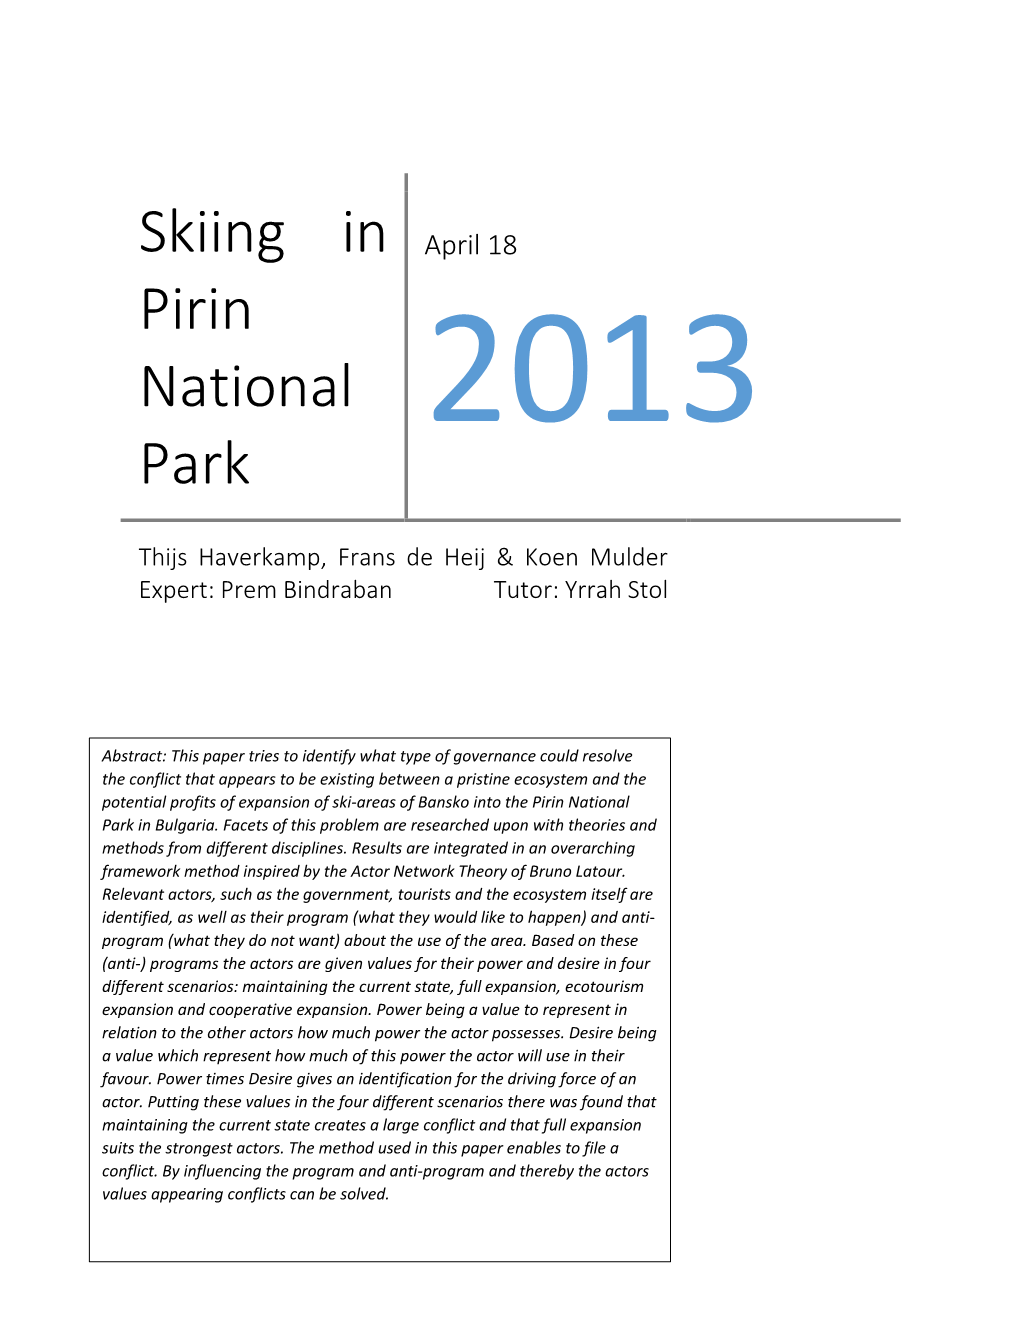 Skiing in Pirin National Park